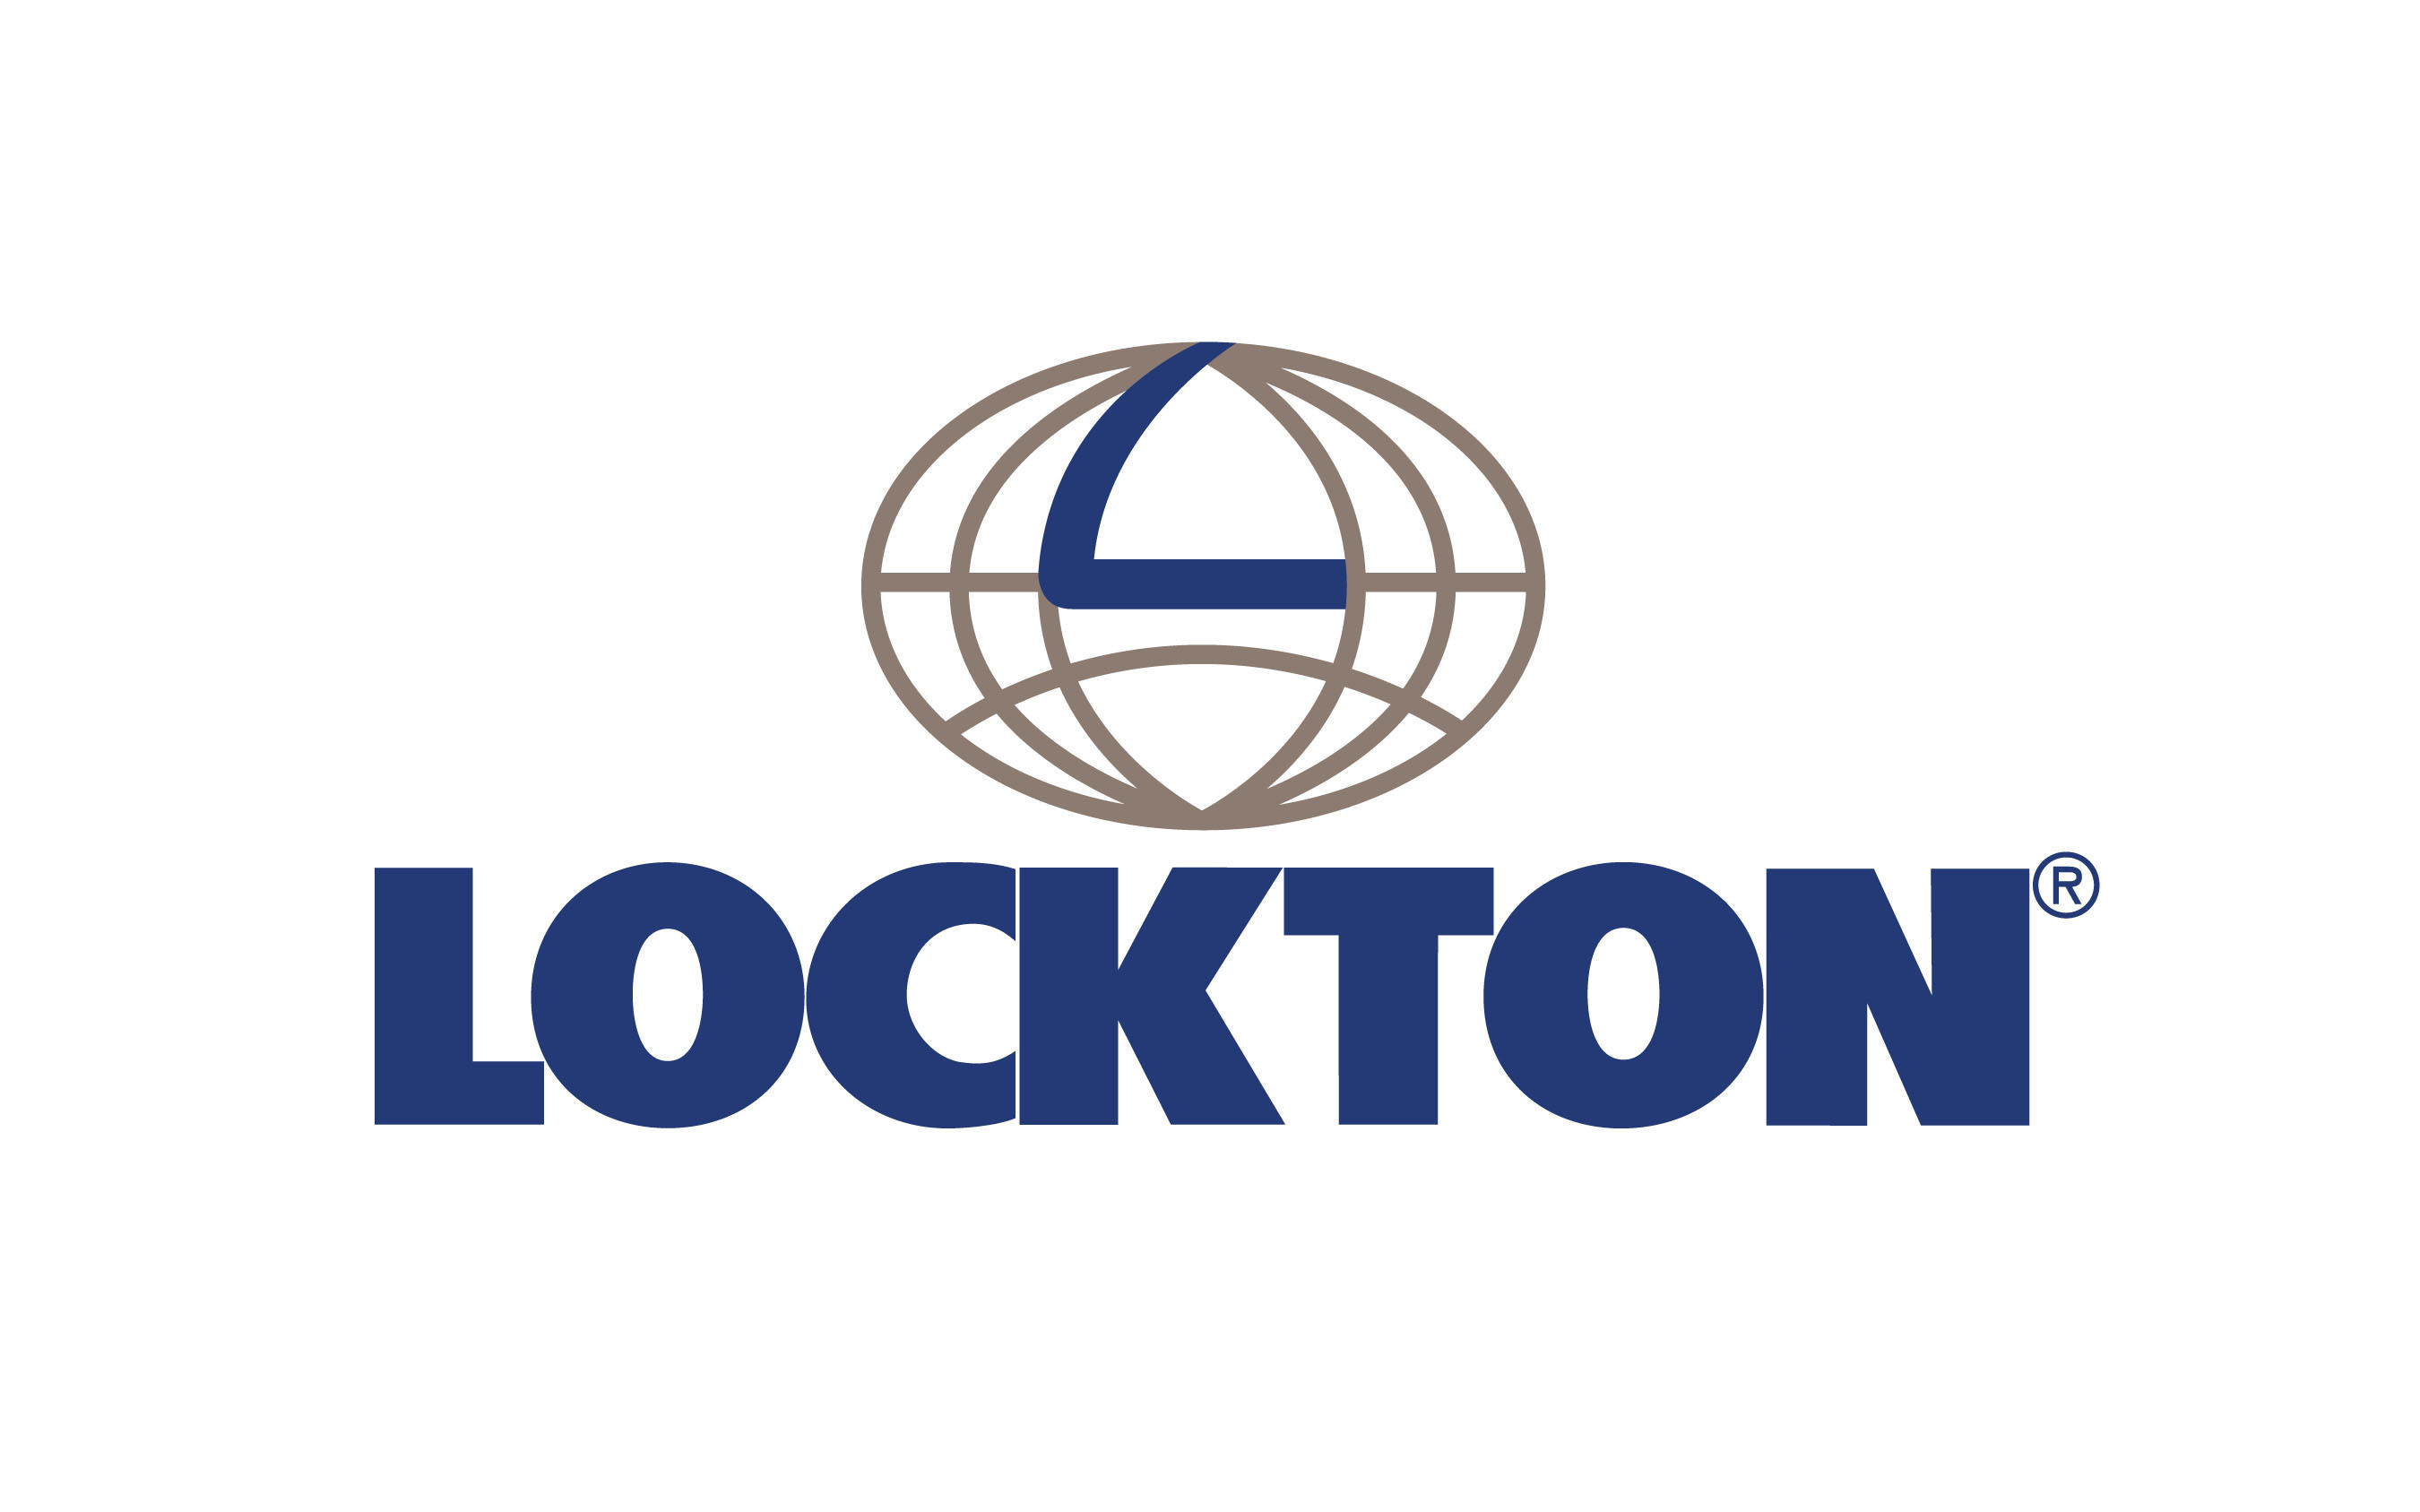 Lockton Re adds Dominic Riley to lead aviation, aerospace practice